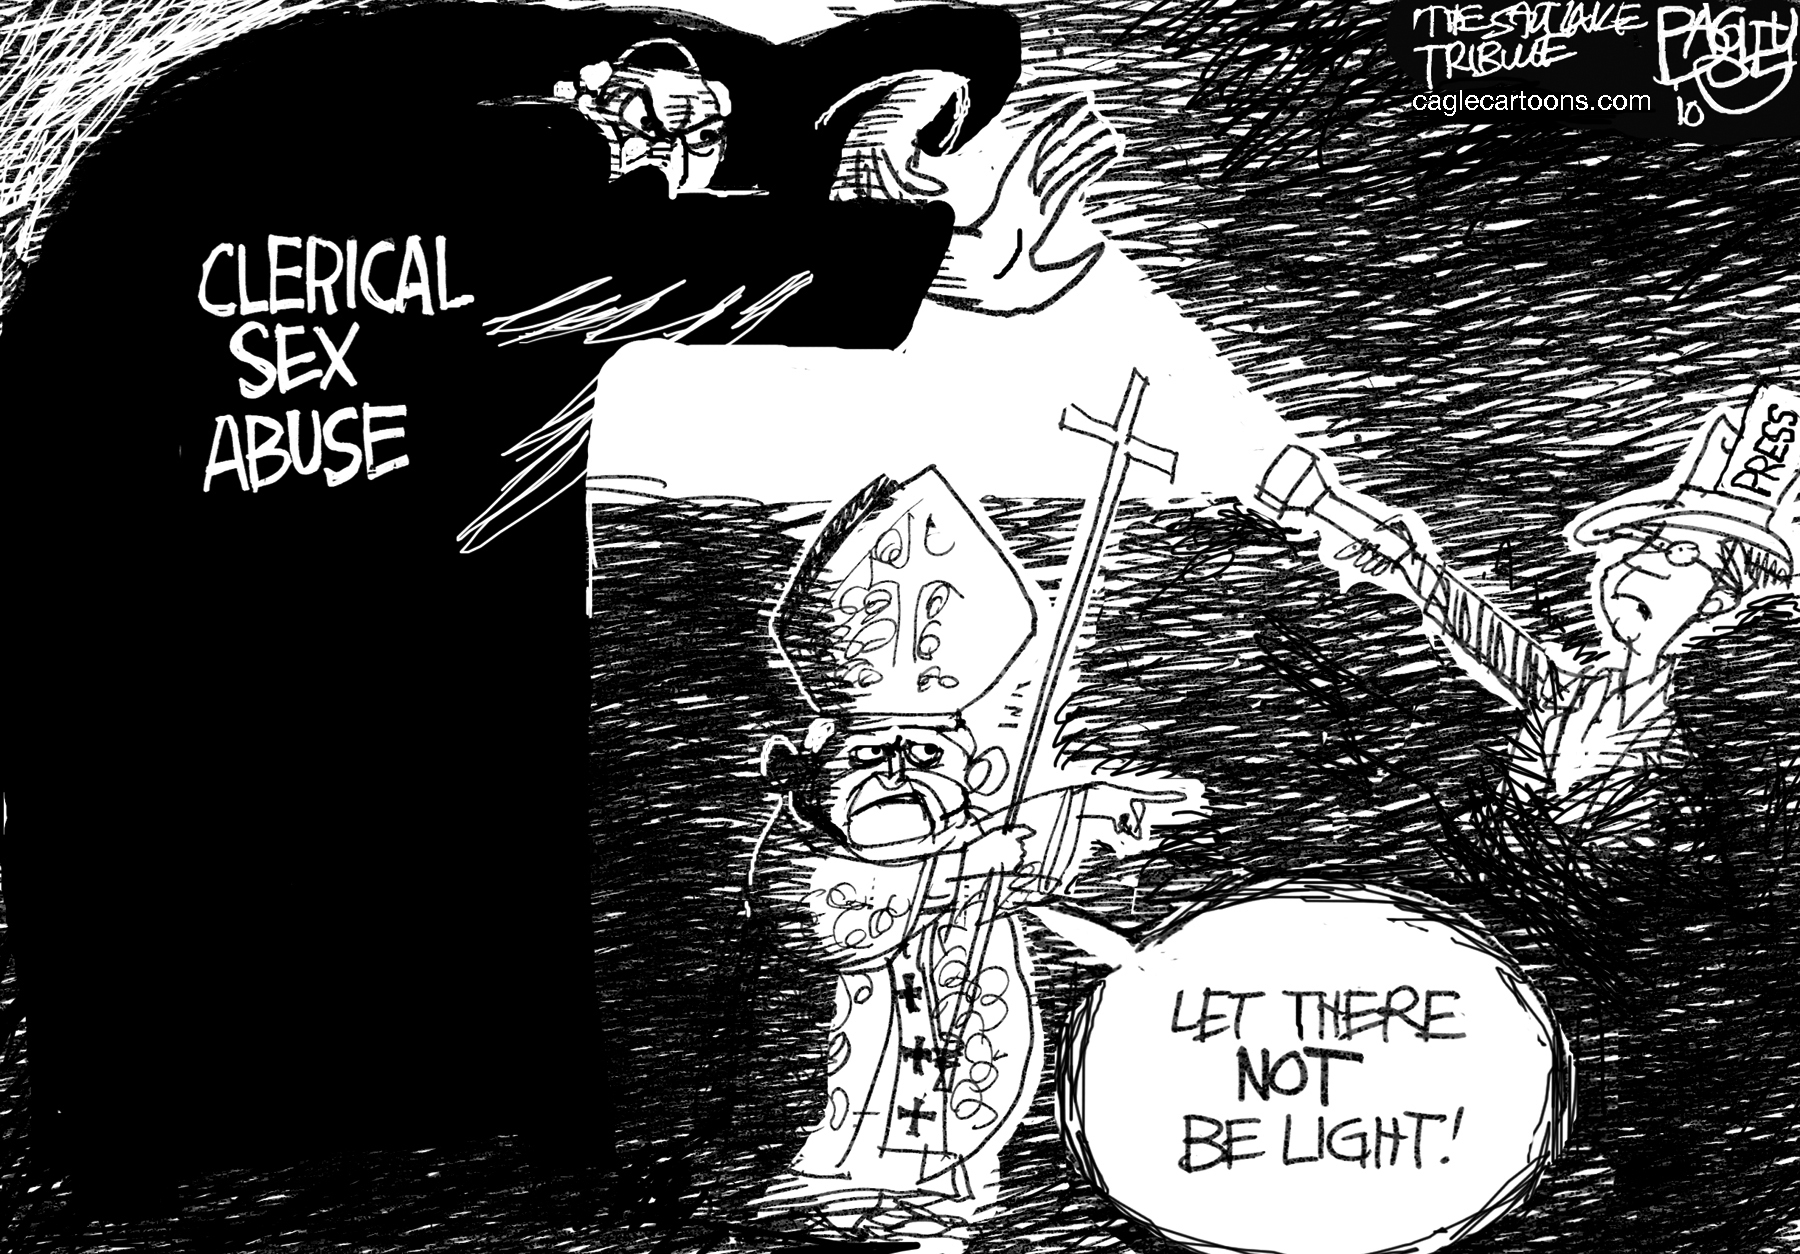 Clerical Sex Abuse Cartoon